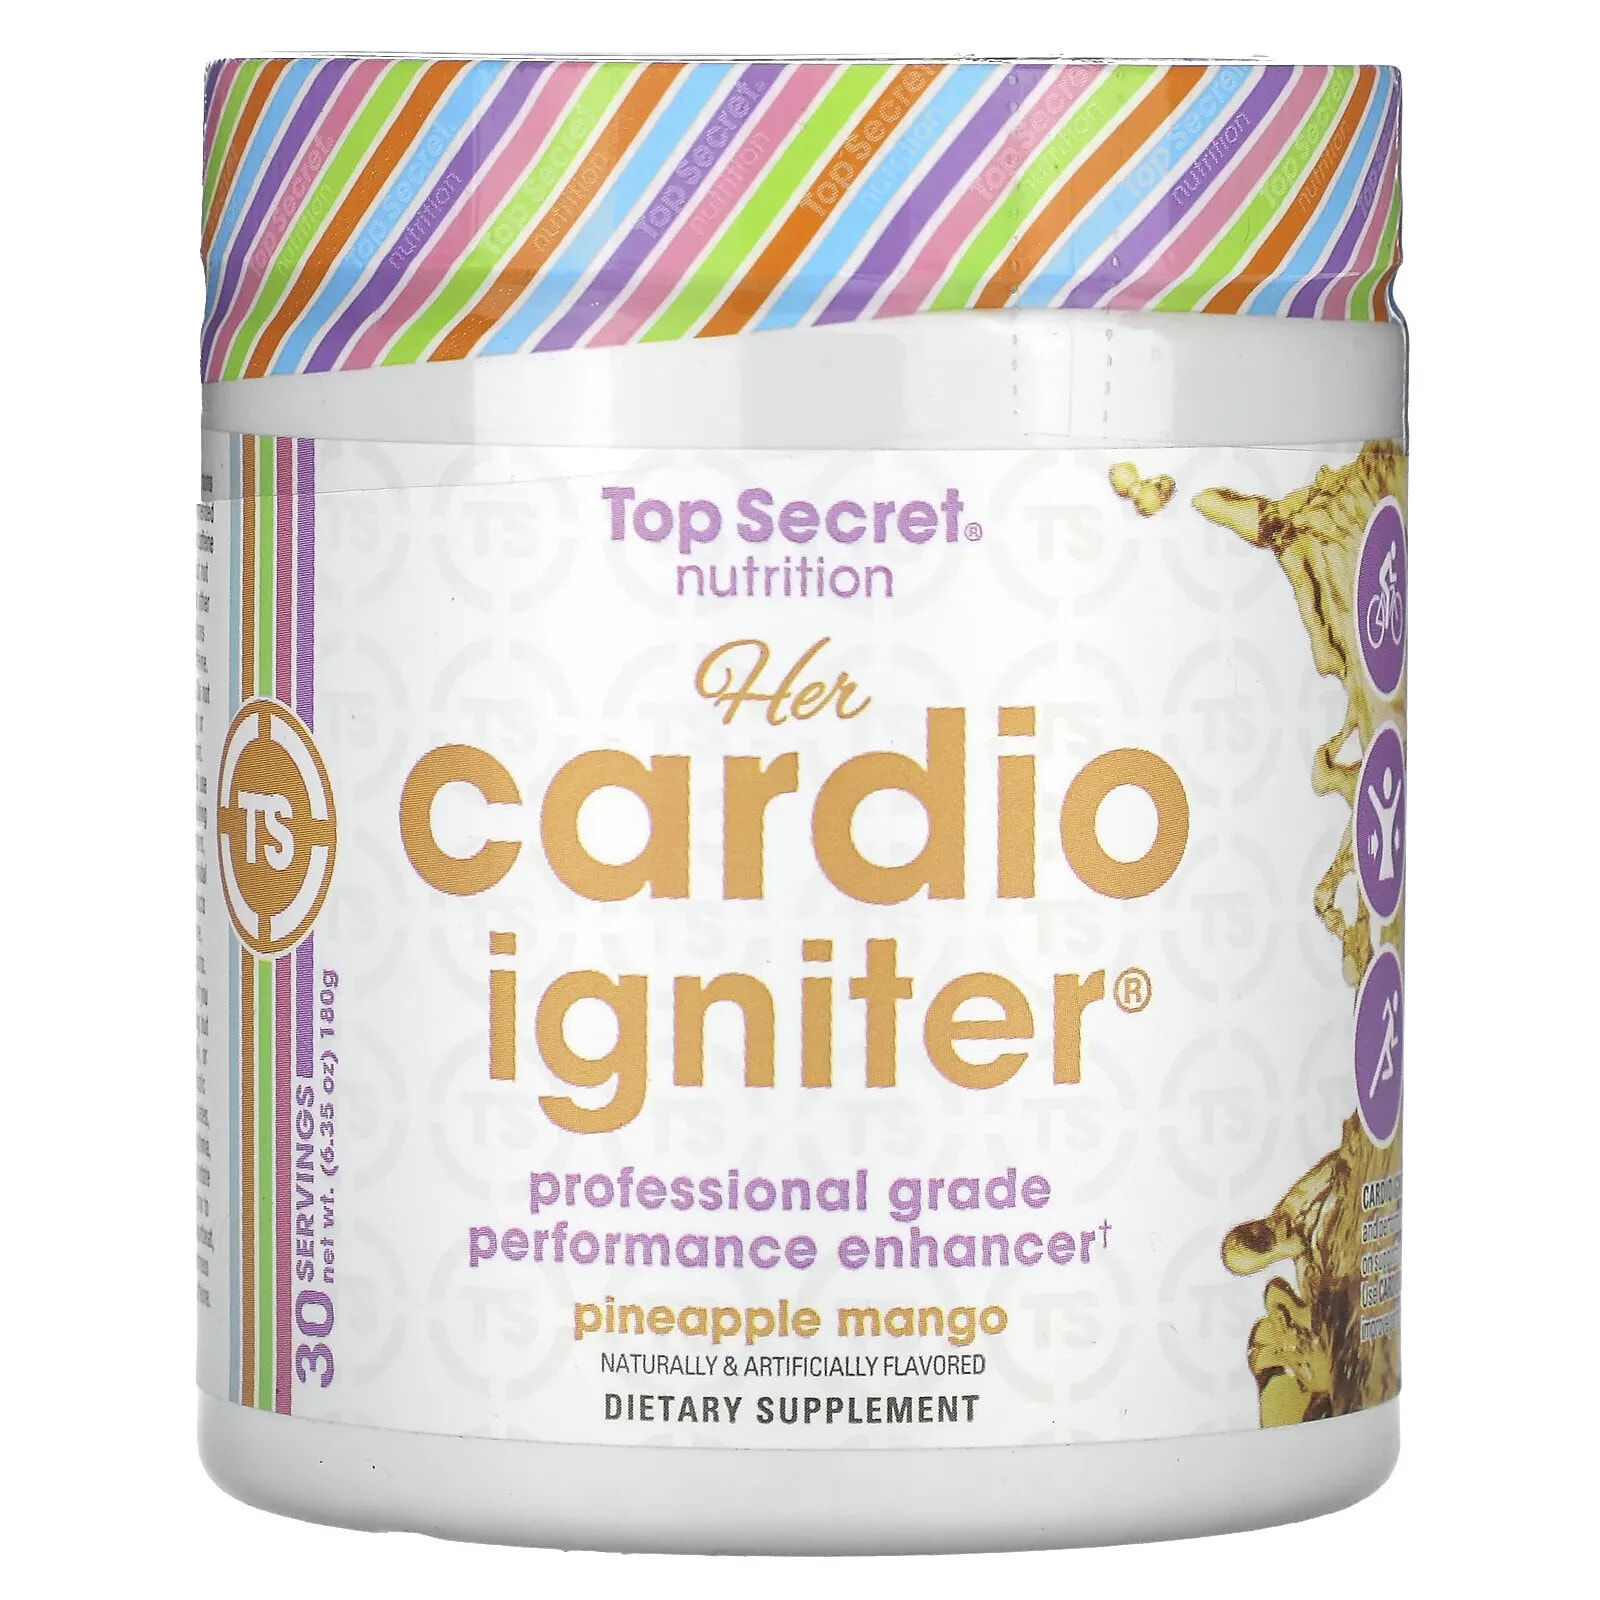 Her Cardio Igniter, Professional Grade Performance Enhancer, Pineapple Mango, 6.35 oz (180 g)